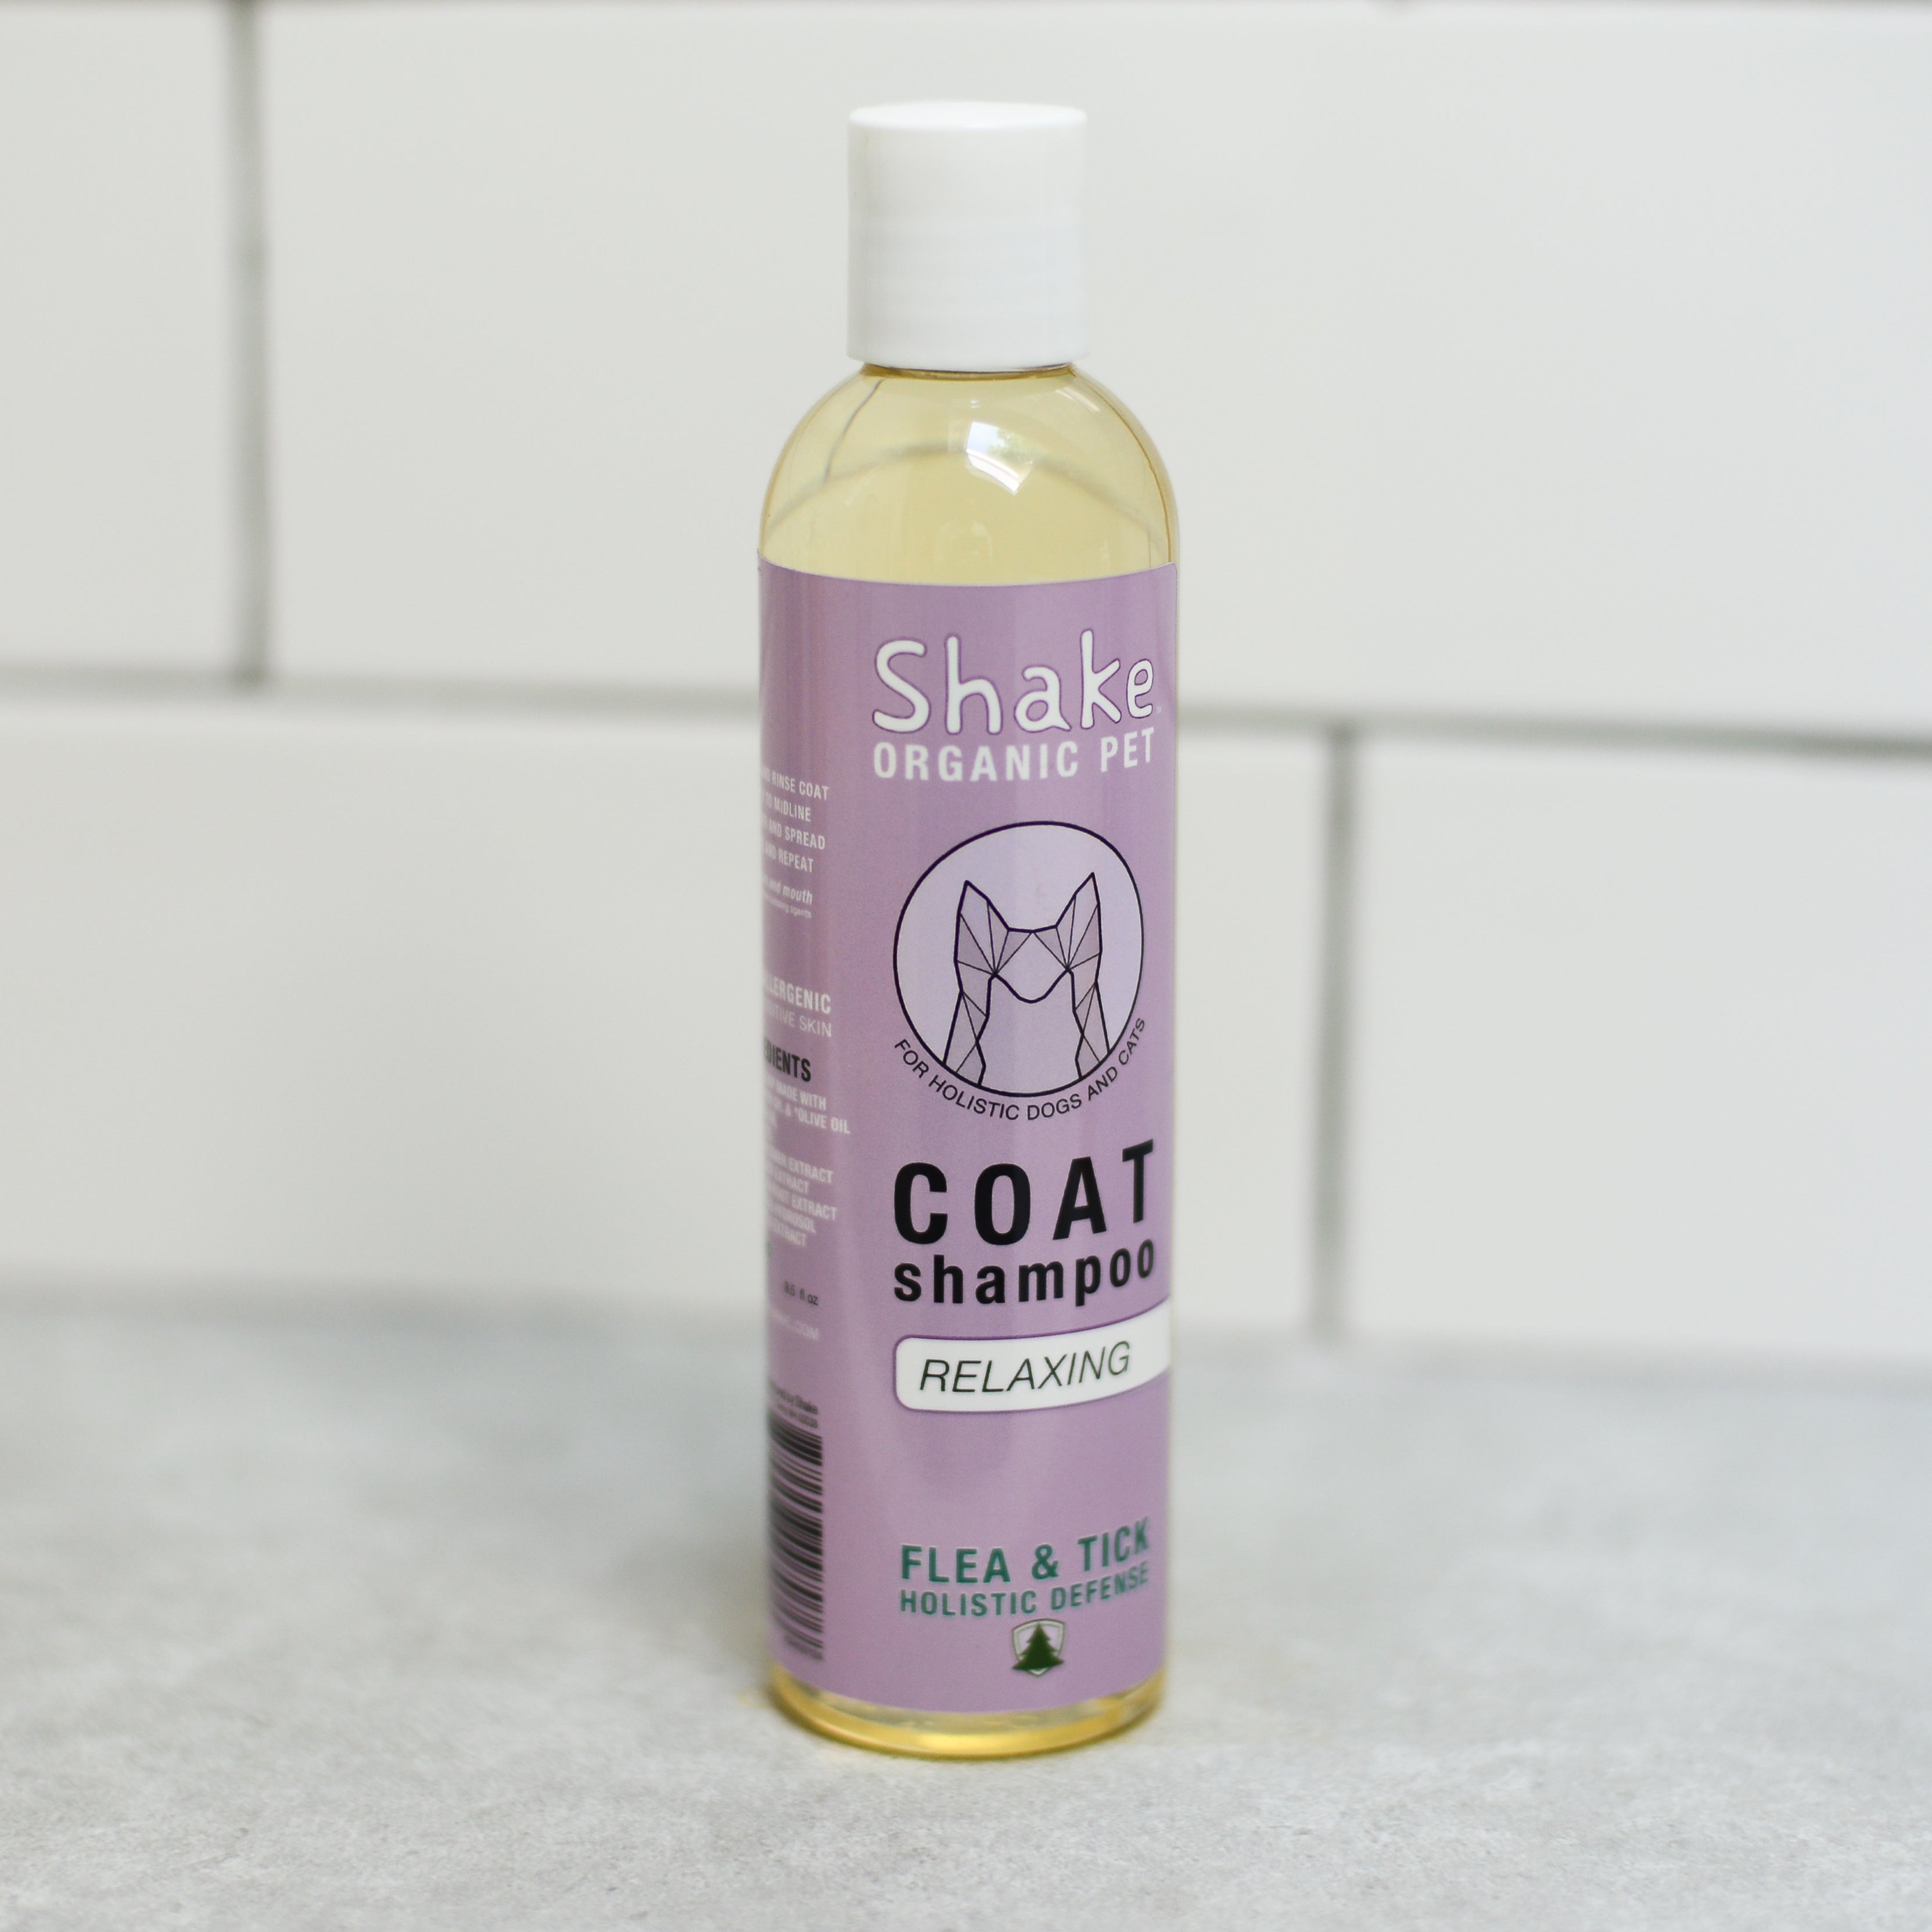 Coat Shampoo - Relaxing